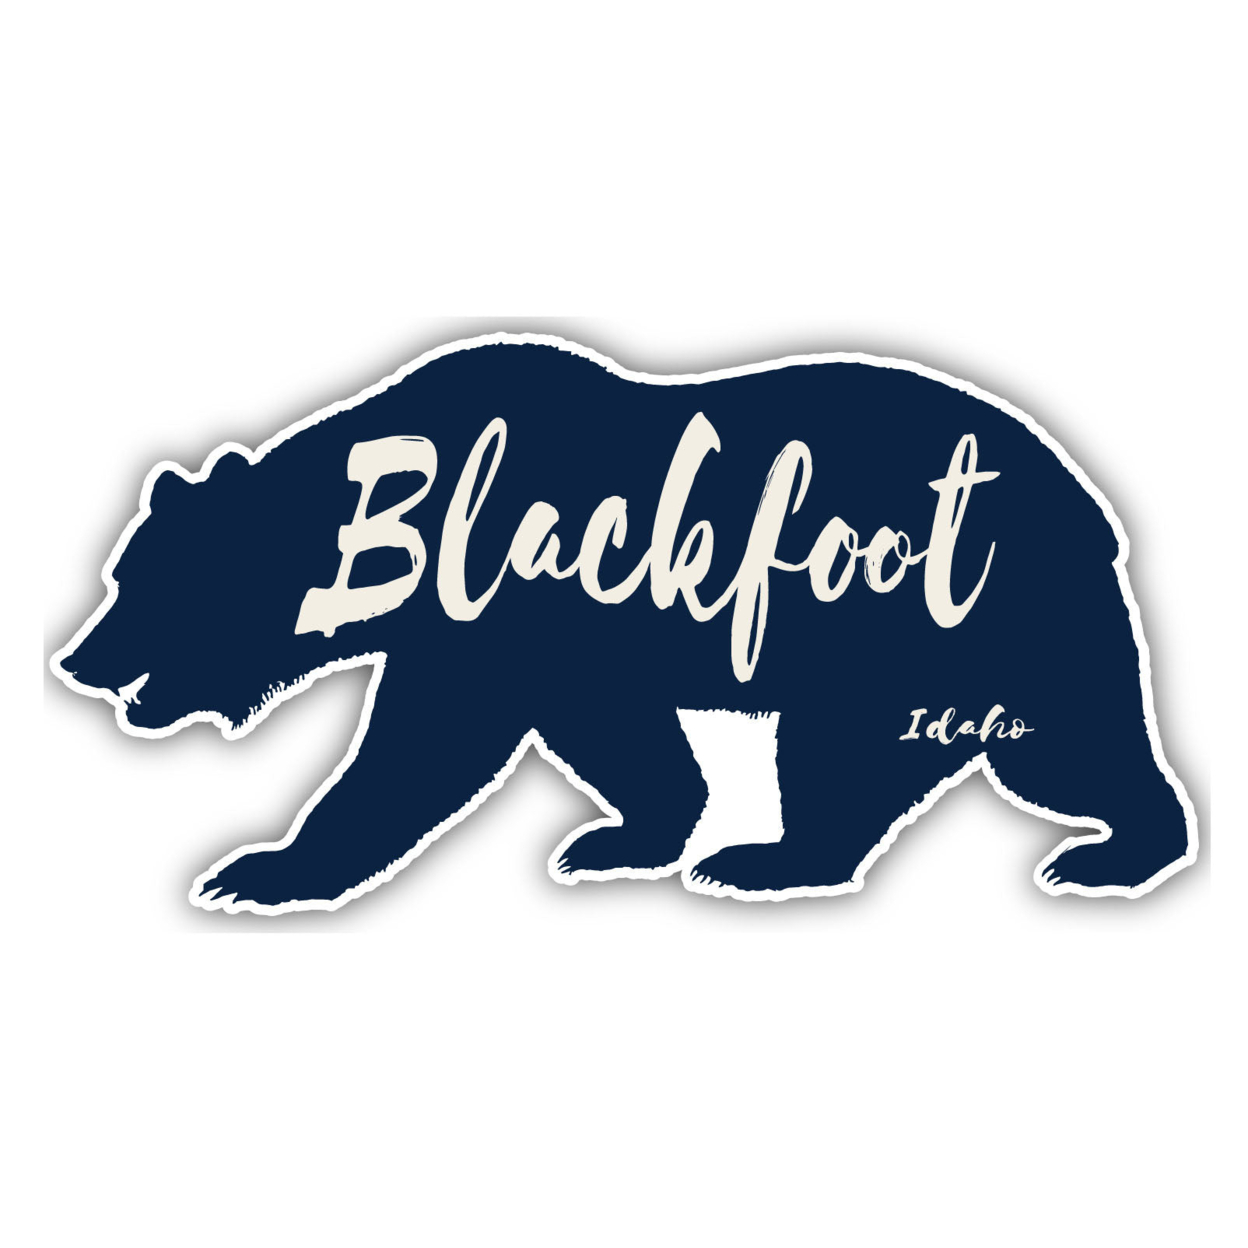 Blackfoot Idaho Souvenir Decorative Stickers (Choose Theme And Size) - Single Unit, 4-Inch, Bear